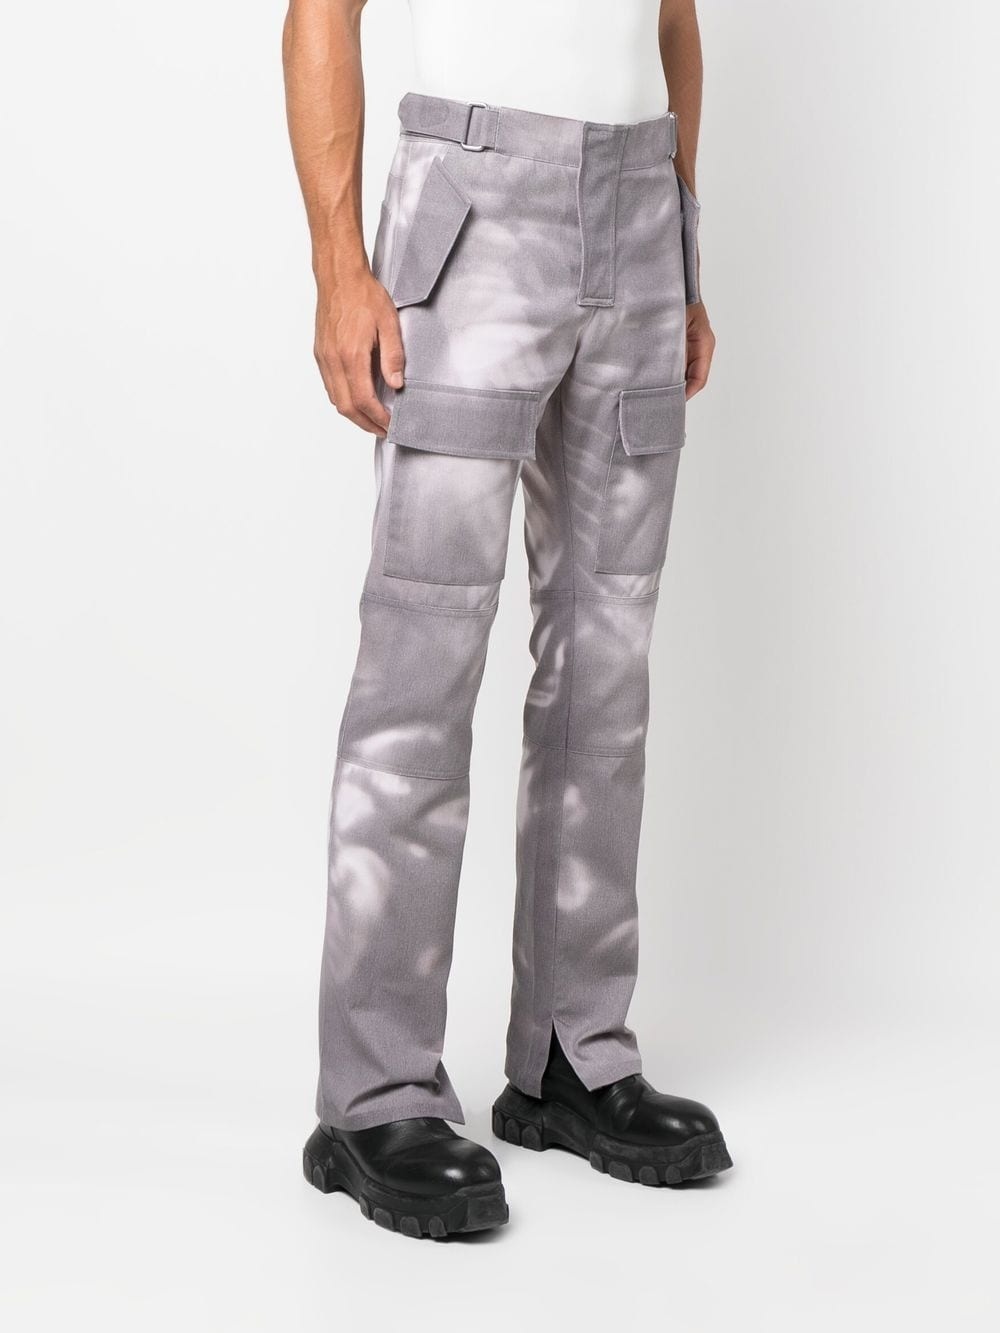 heat-reflective cargo trousers - 3